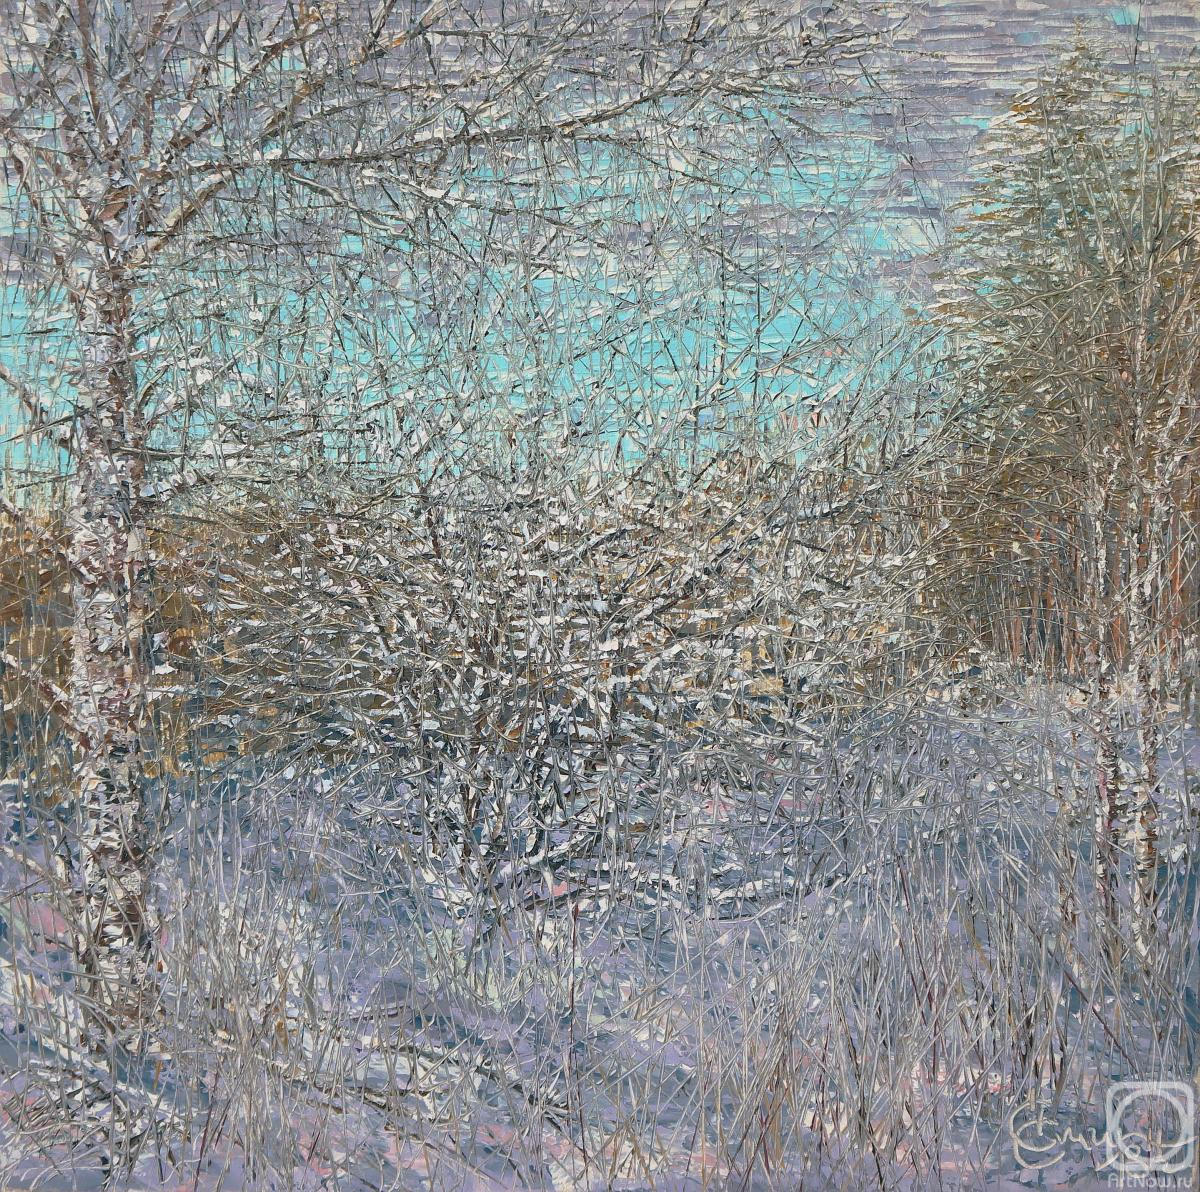 Smirnov Sergey. Crystal frost of January